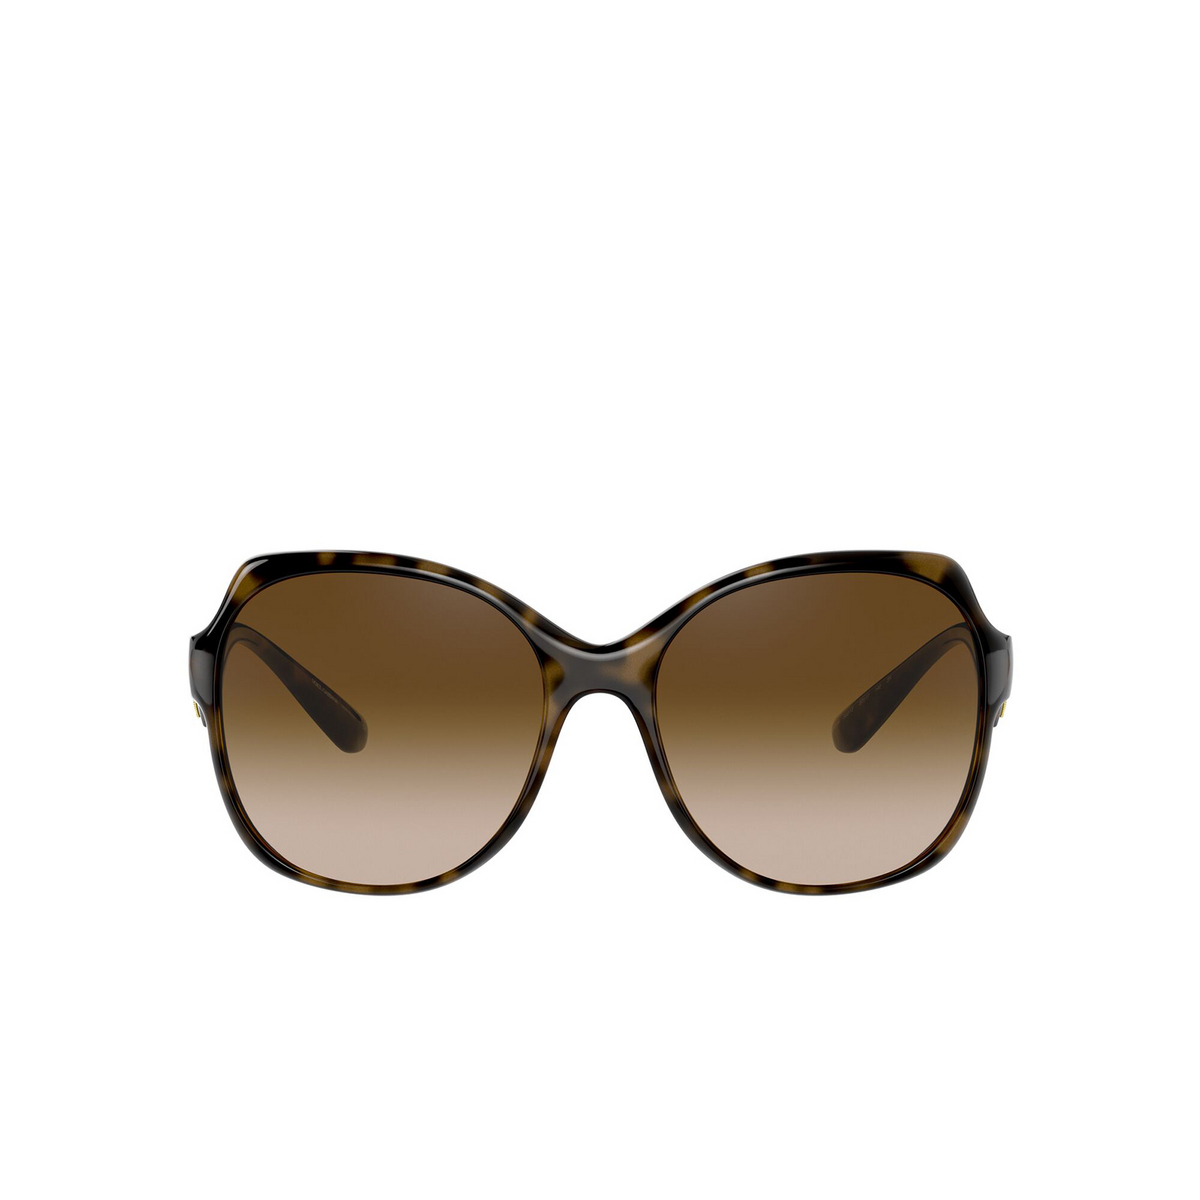 Dolce & Gabbana® Butterfly Sunglasses: DG6154 color Havana 502/13 - front view.